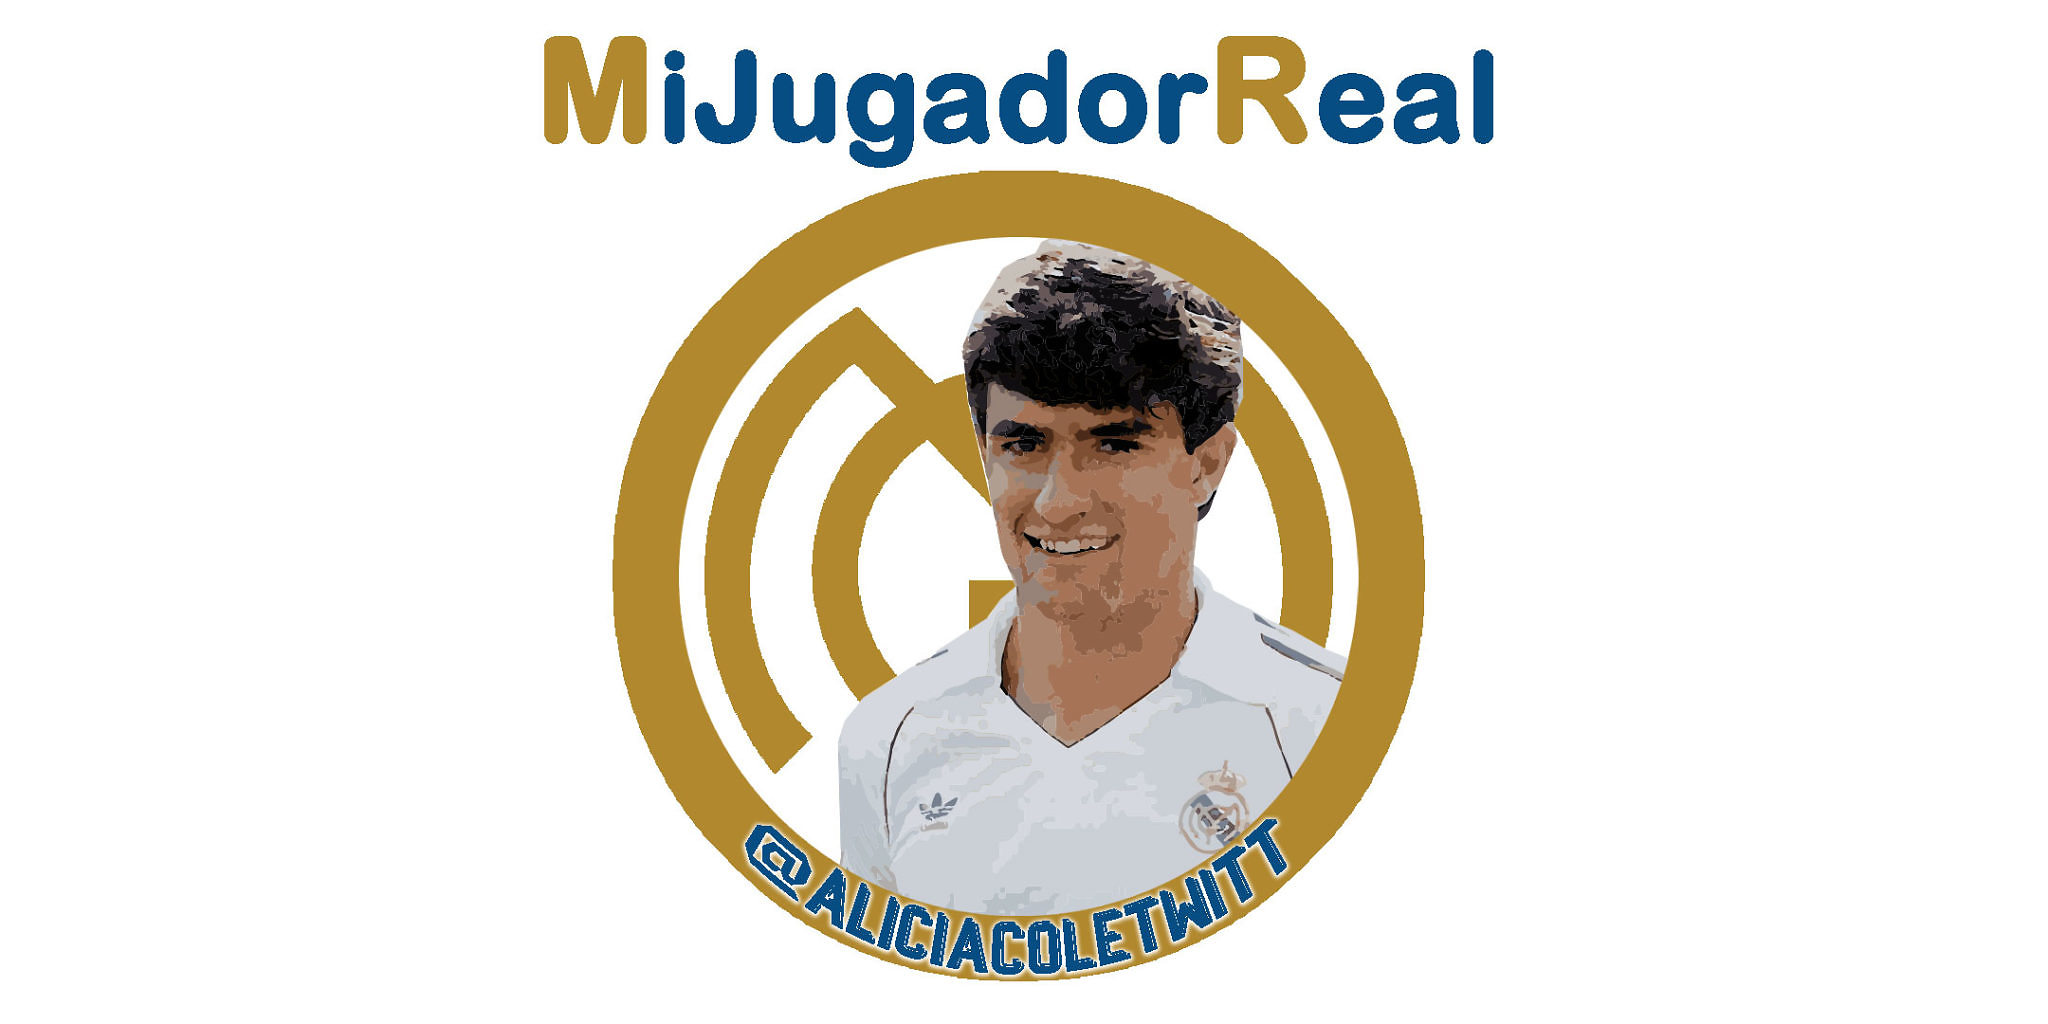 #MiJugadorReal | @Aliciacoletwitt